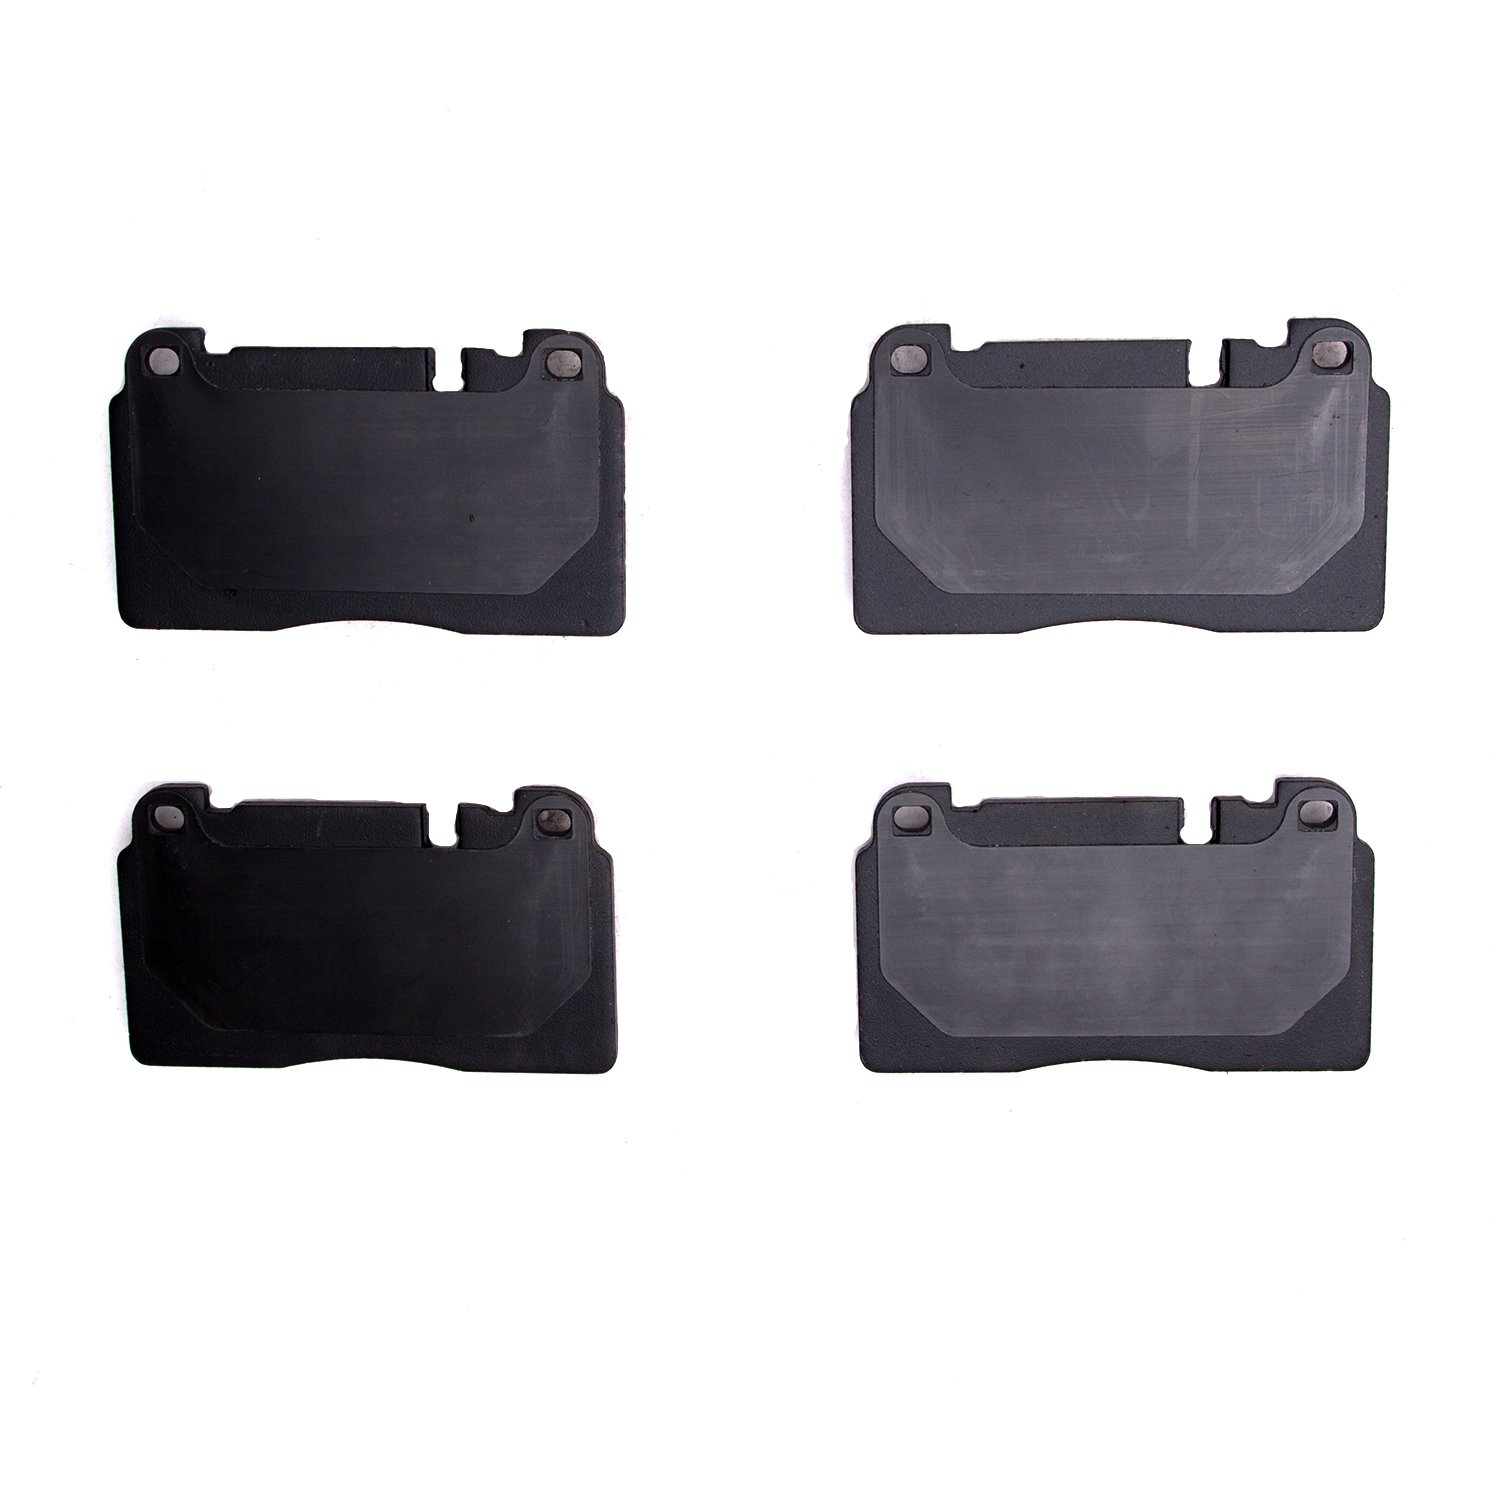 1310-1663-00 3000-Series Ceramic Brake Pads, 2013-2020 Multiple Makes/Models, Position: Front